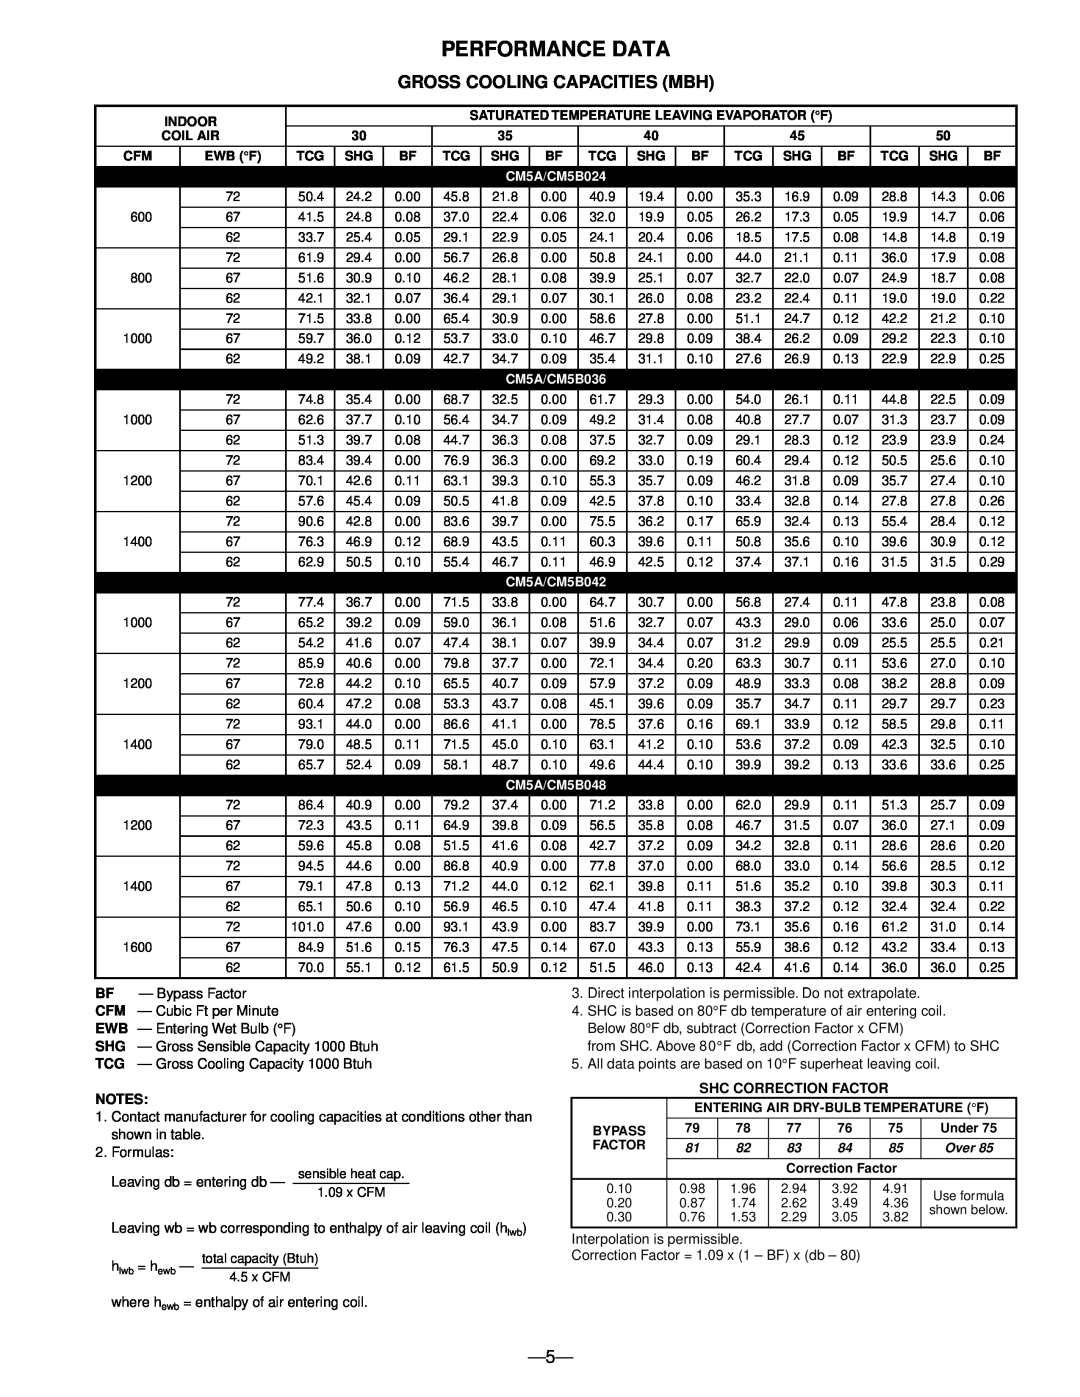 Bryant CM5B, CM5A manual Performance Data, Gross Cooling Capacities Mbh, Shc Correction Factor 